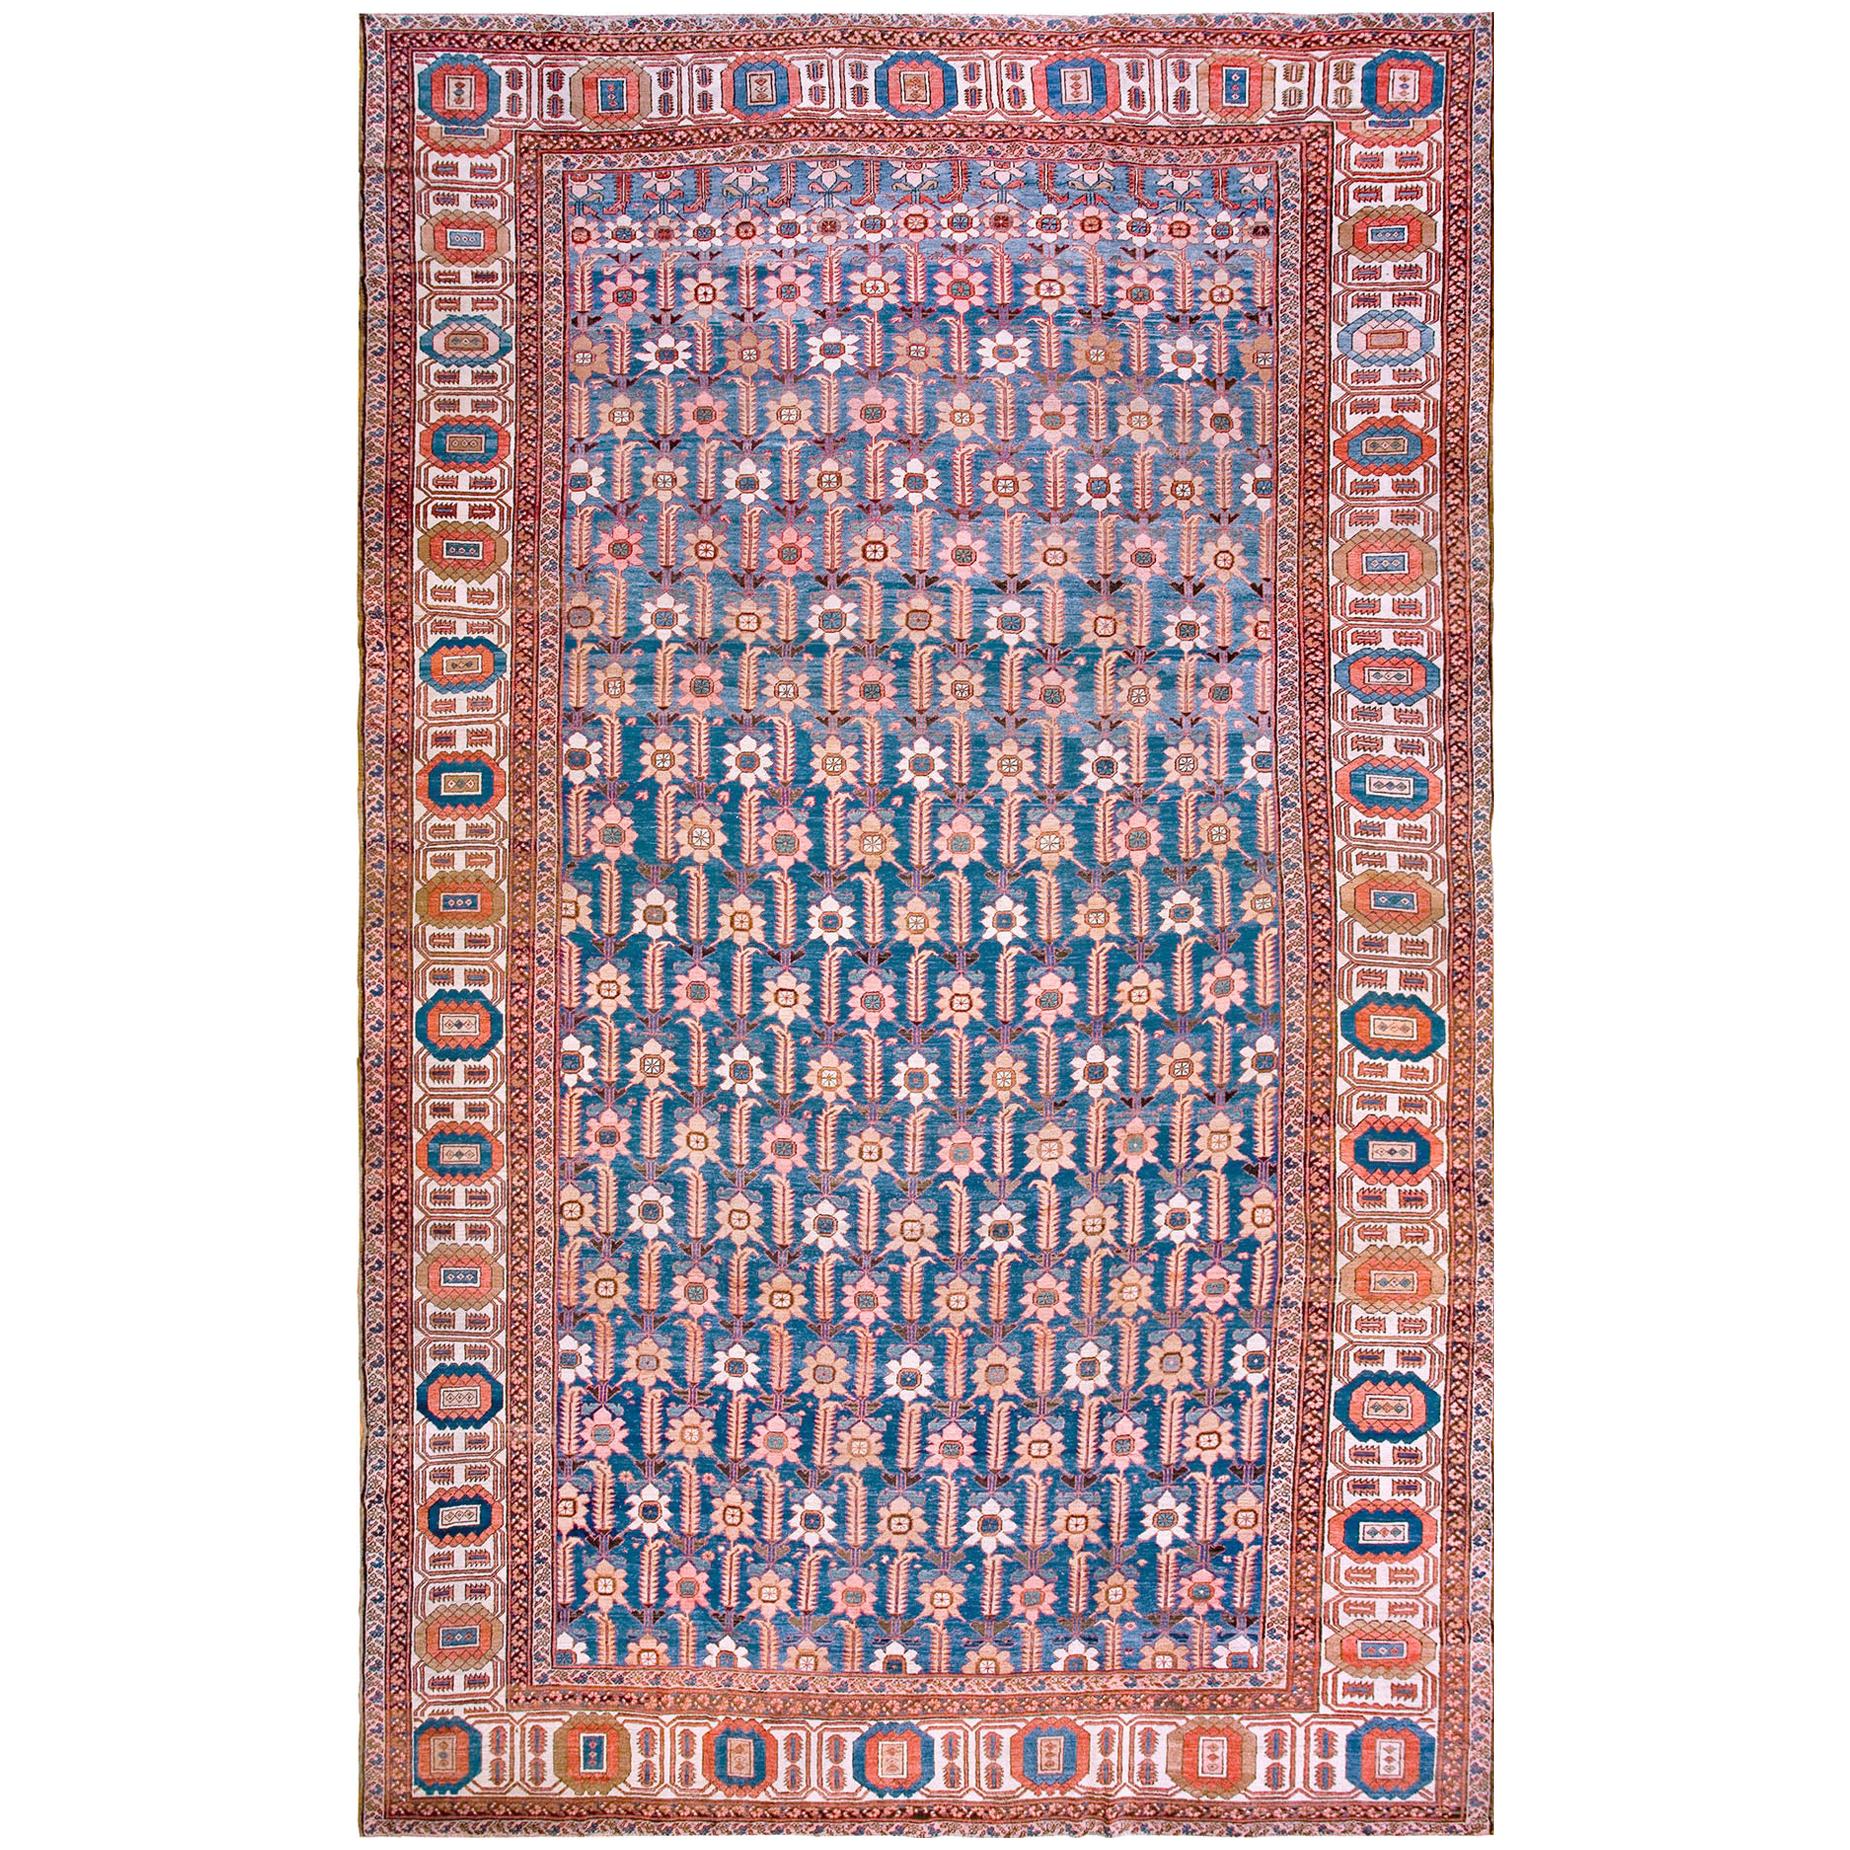 19th Century N.W. Persian Bakhshaiesh Carpet ( 11'10" x 19'10" - 360 x 604 ) For Sale